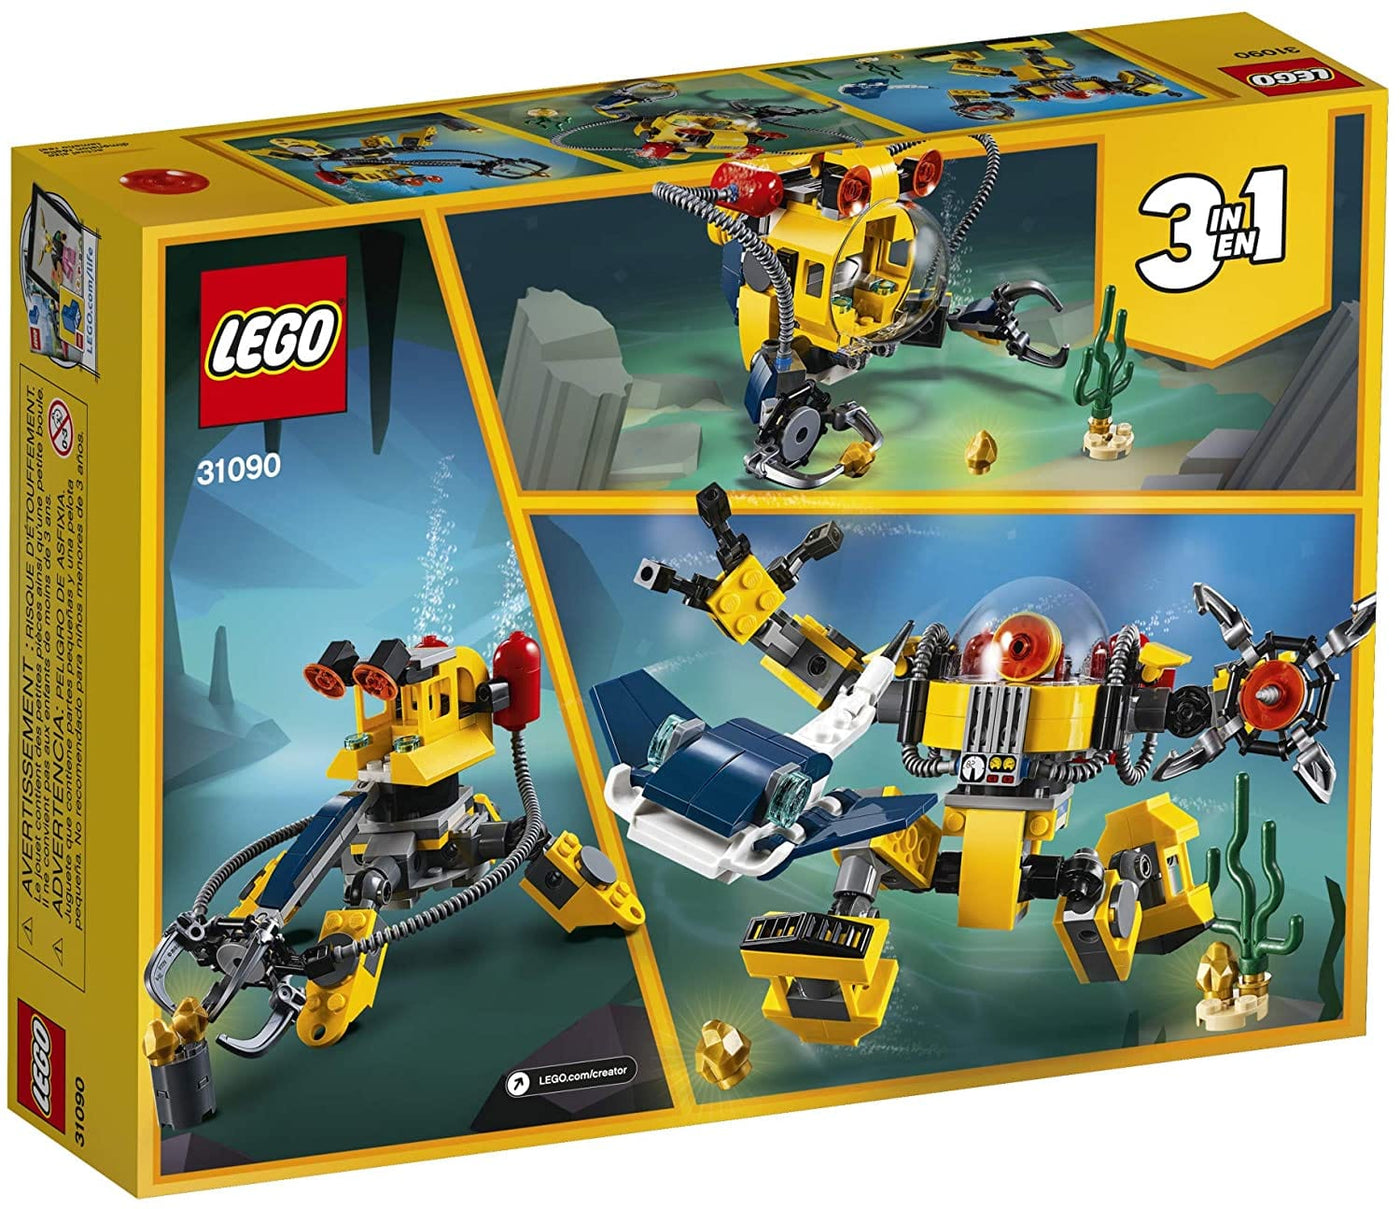 Underwater Robot, 31090 | LEGO CREATOR by LEGO, Denmark Toy